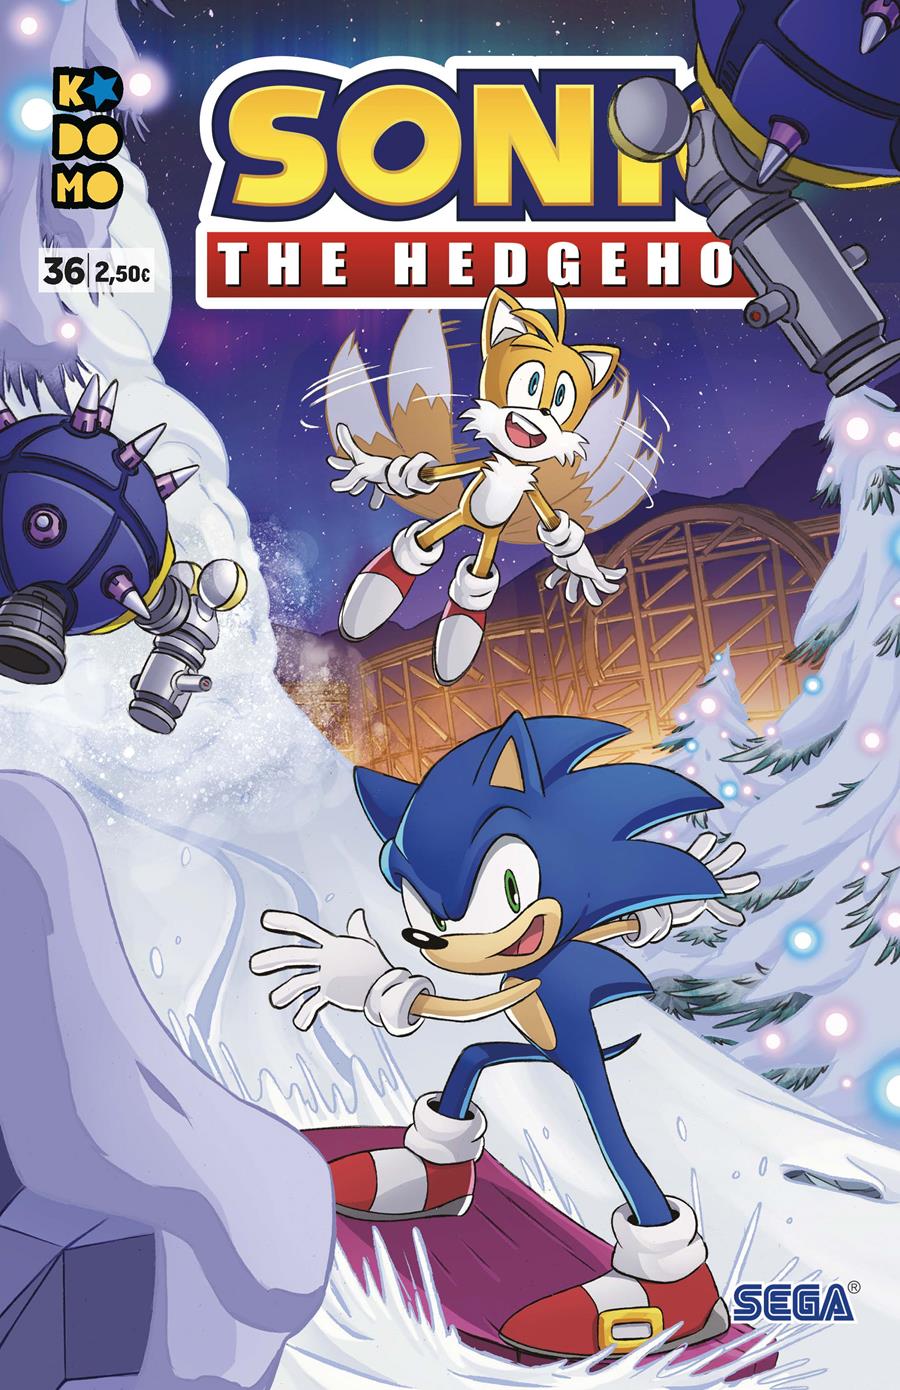 Sonic The Hedgehog núm. 36 | N0722-ECC56 | Evan Stanley / Evan Stanley | Terra de Còmic - Tu tienda de cómics online especializada en cómics, manga y merchandising